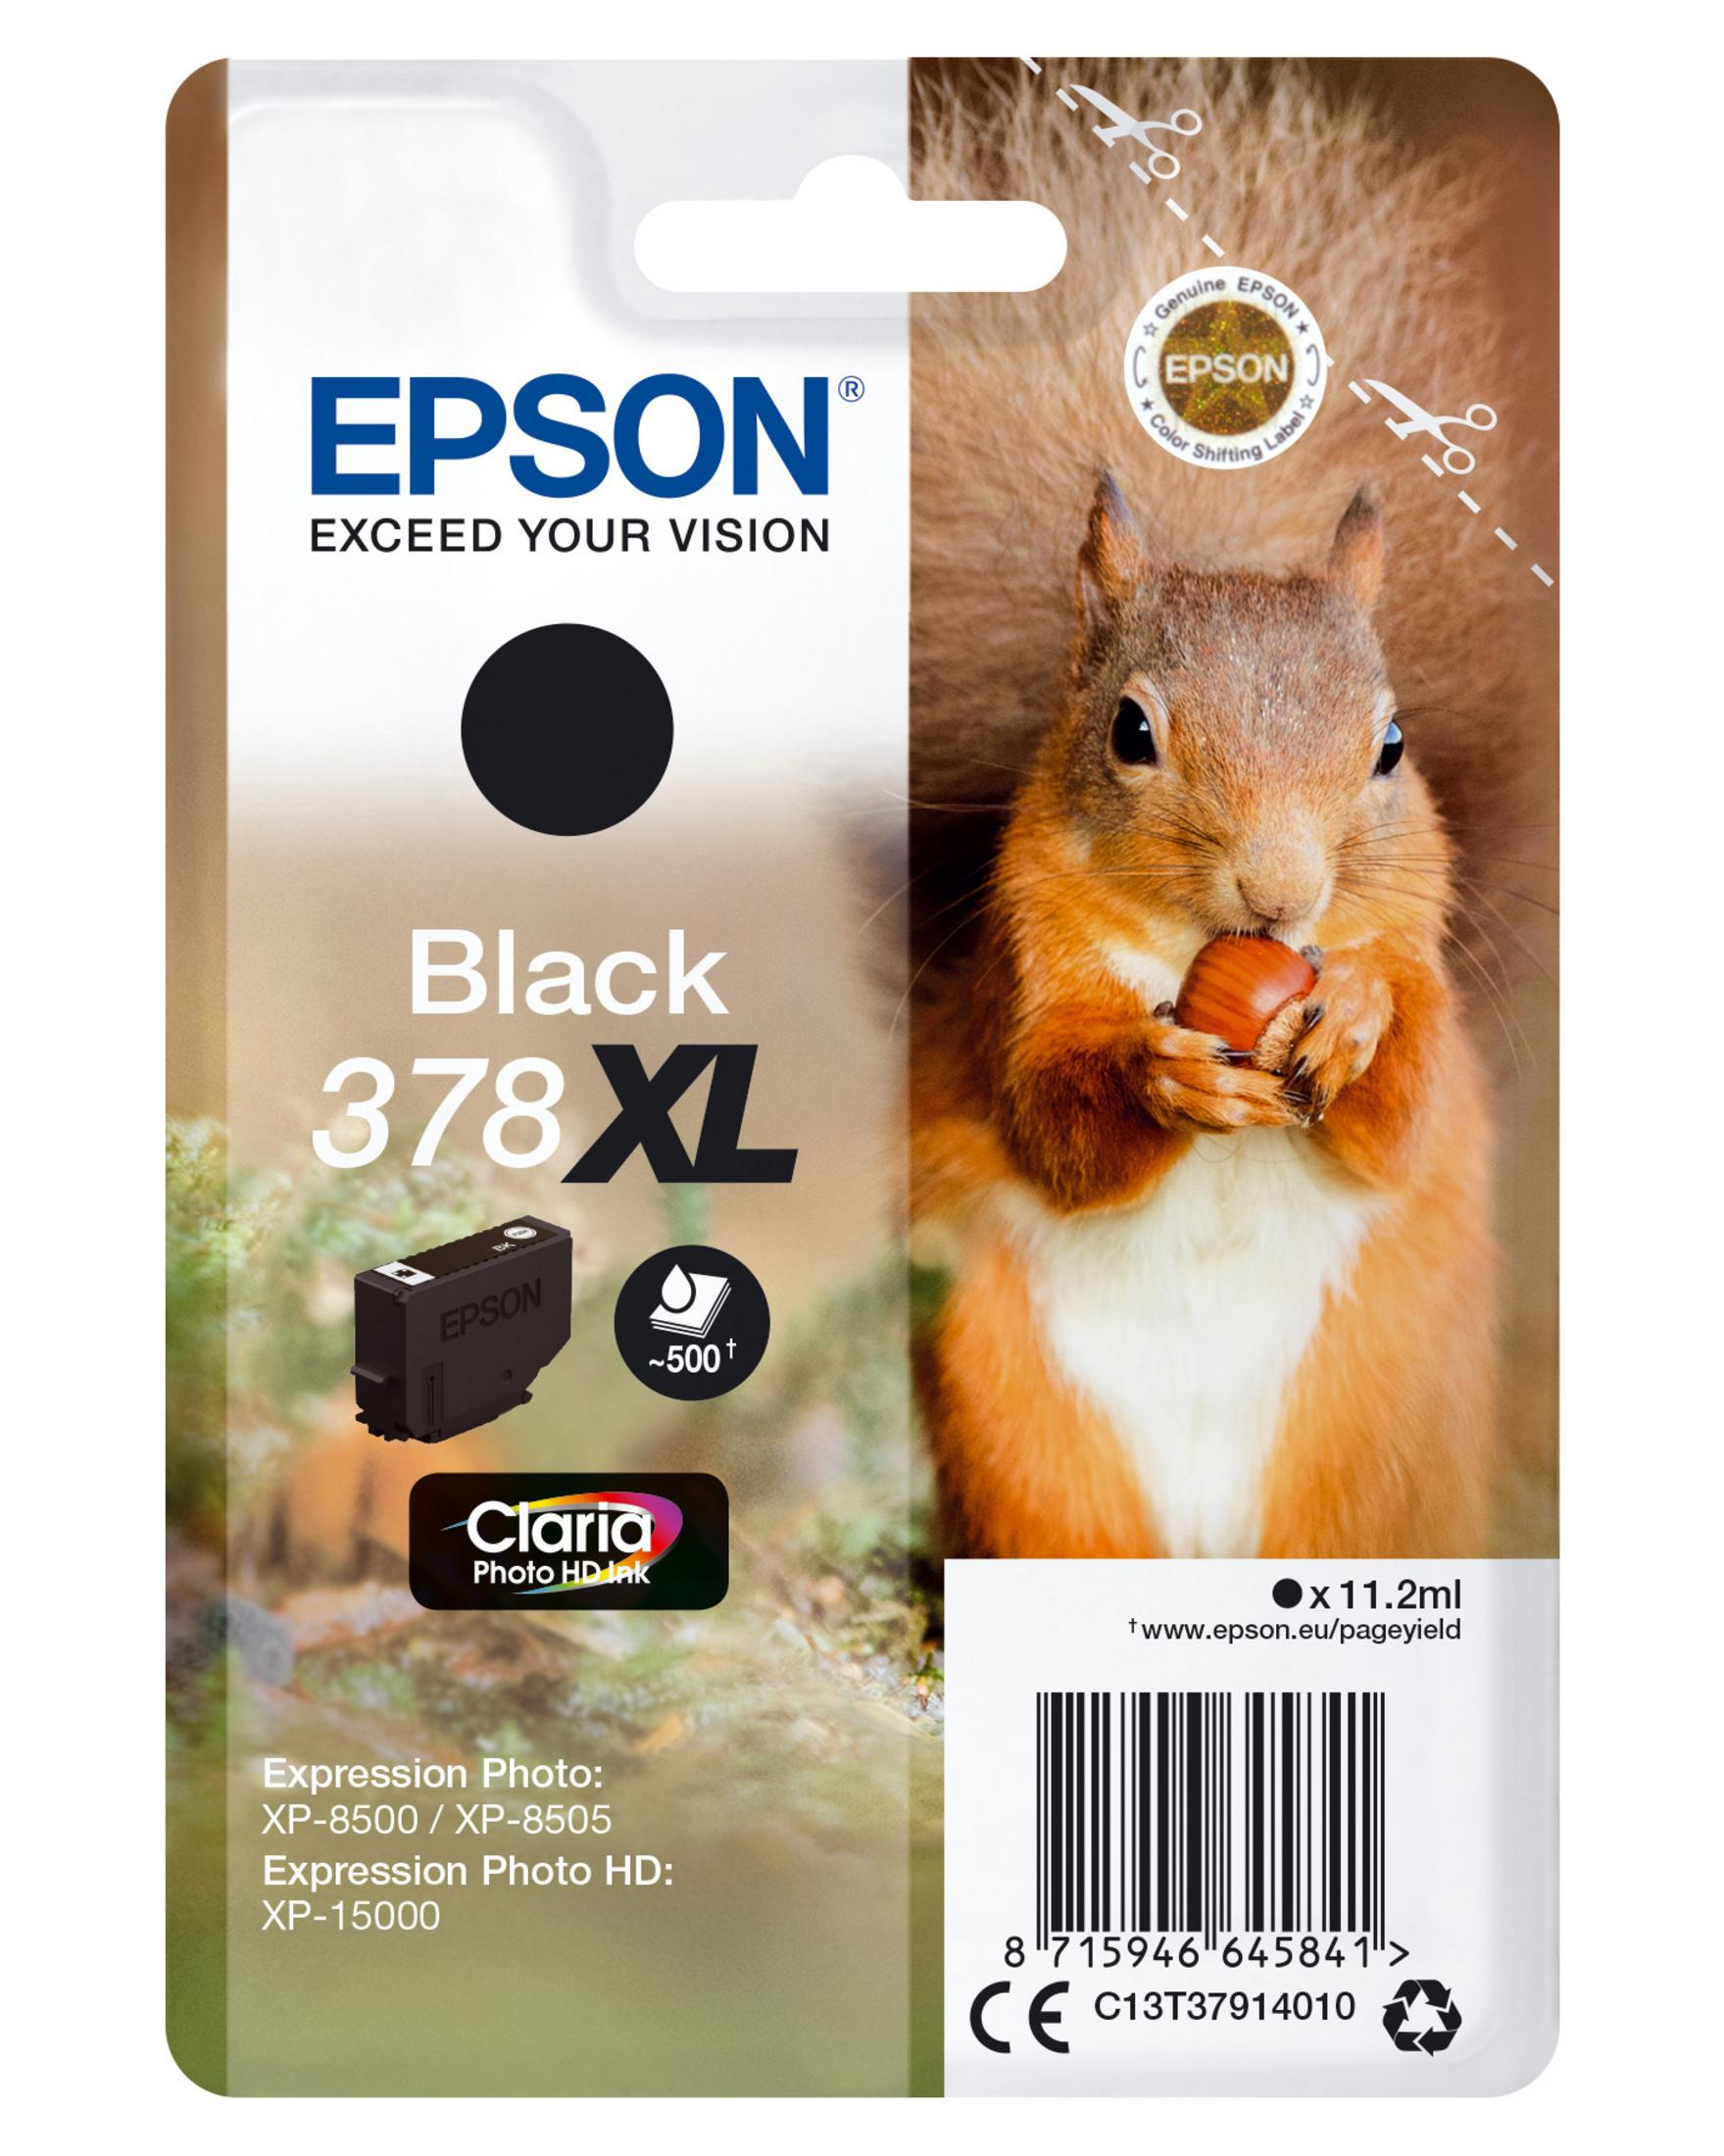 EPSON 378XL Tinte (C13T37914010) schwarz